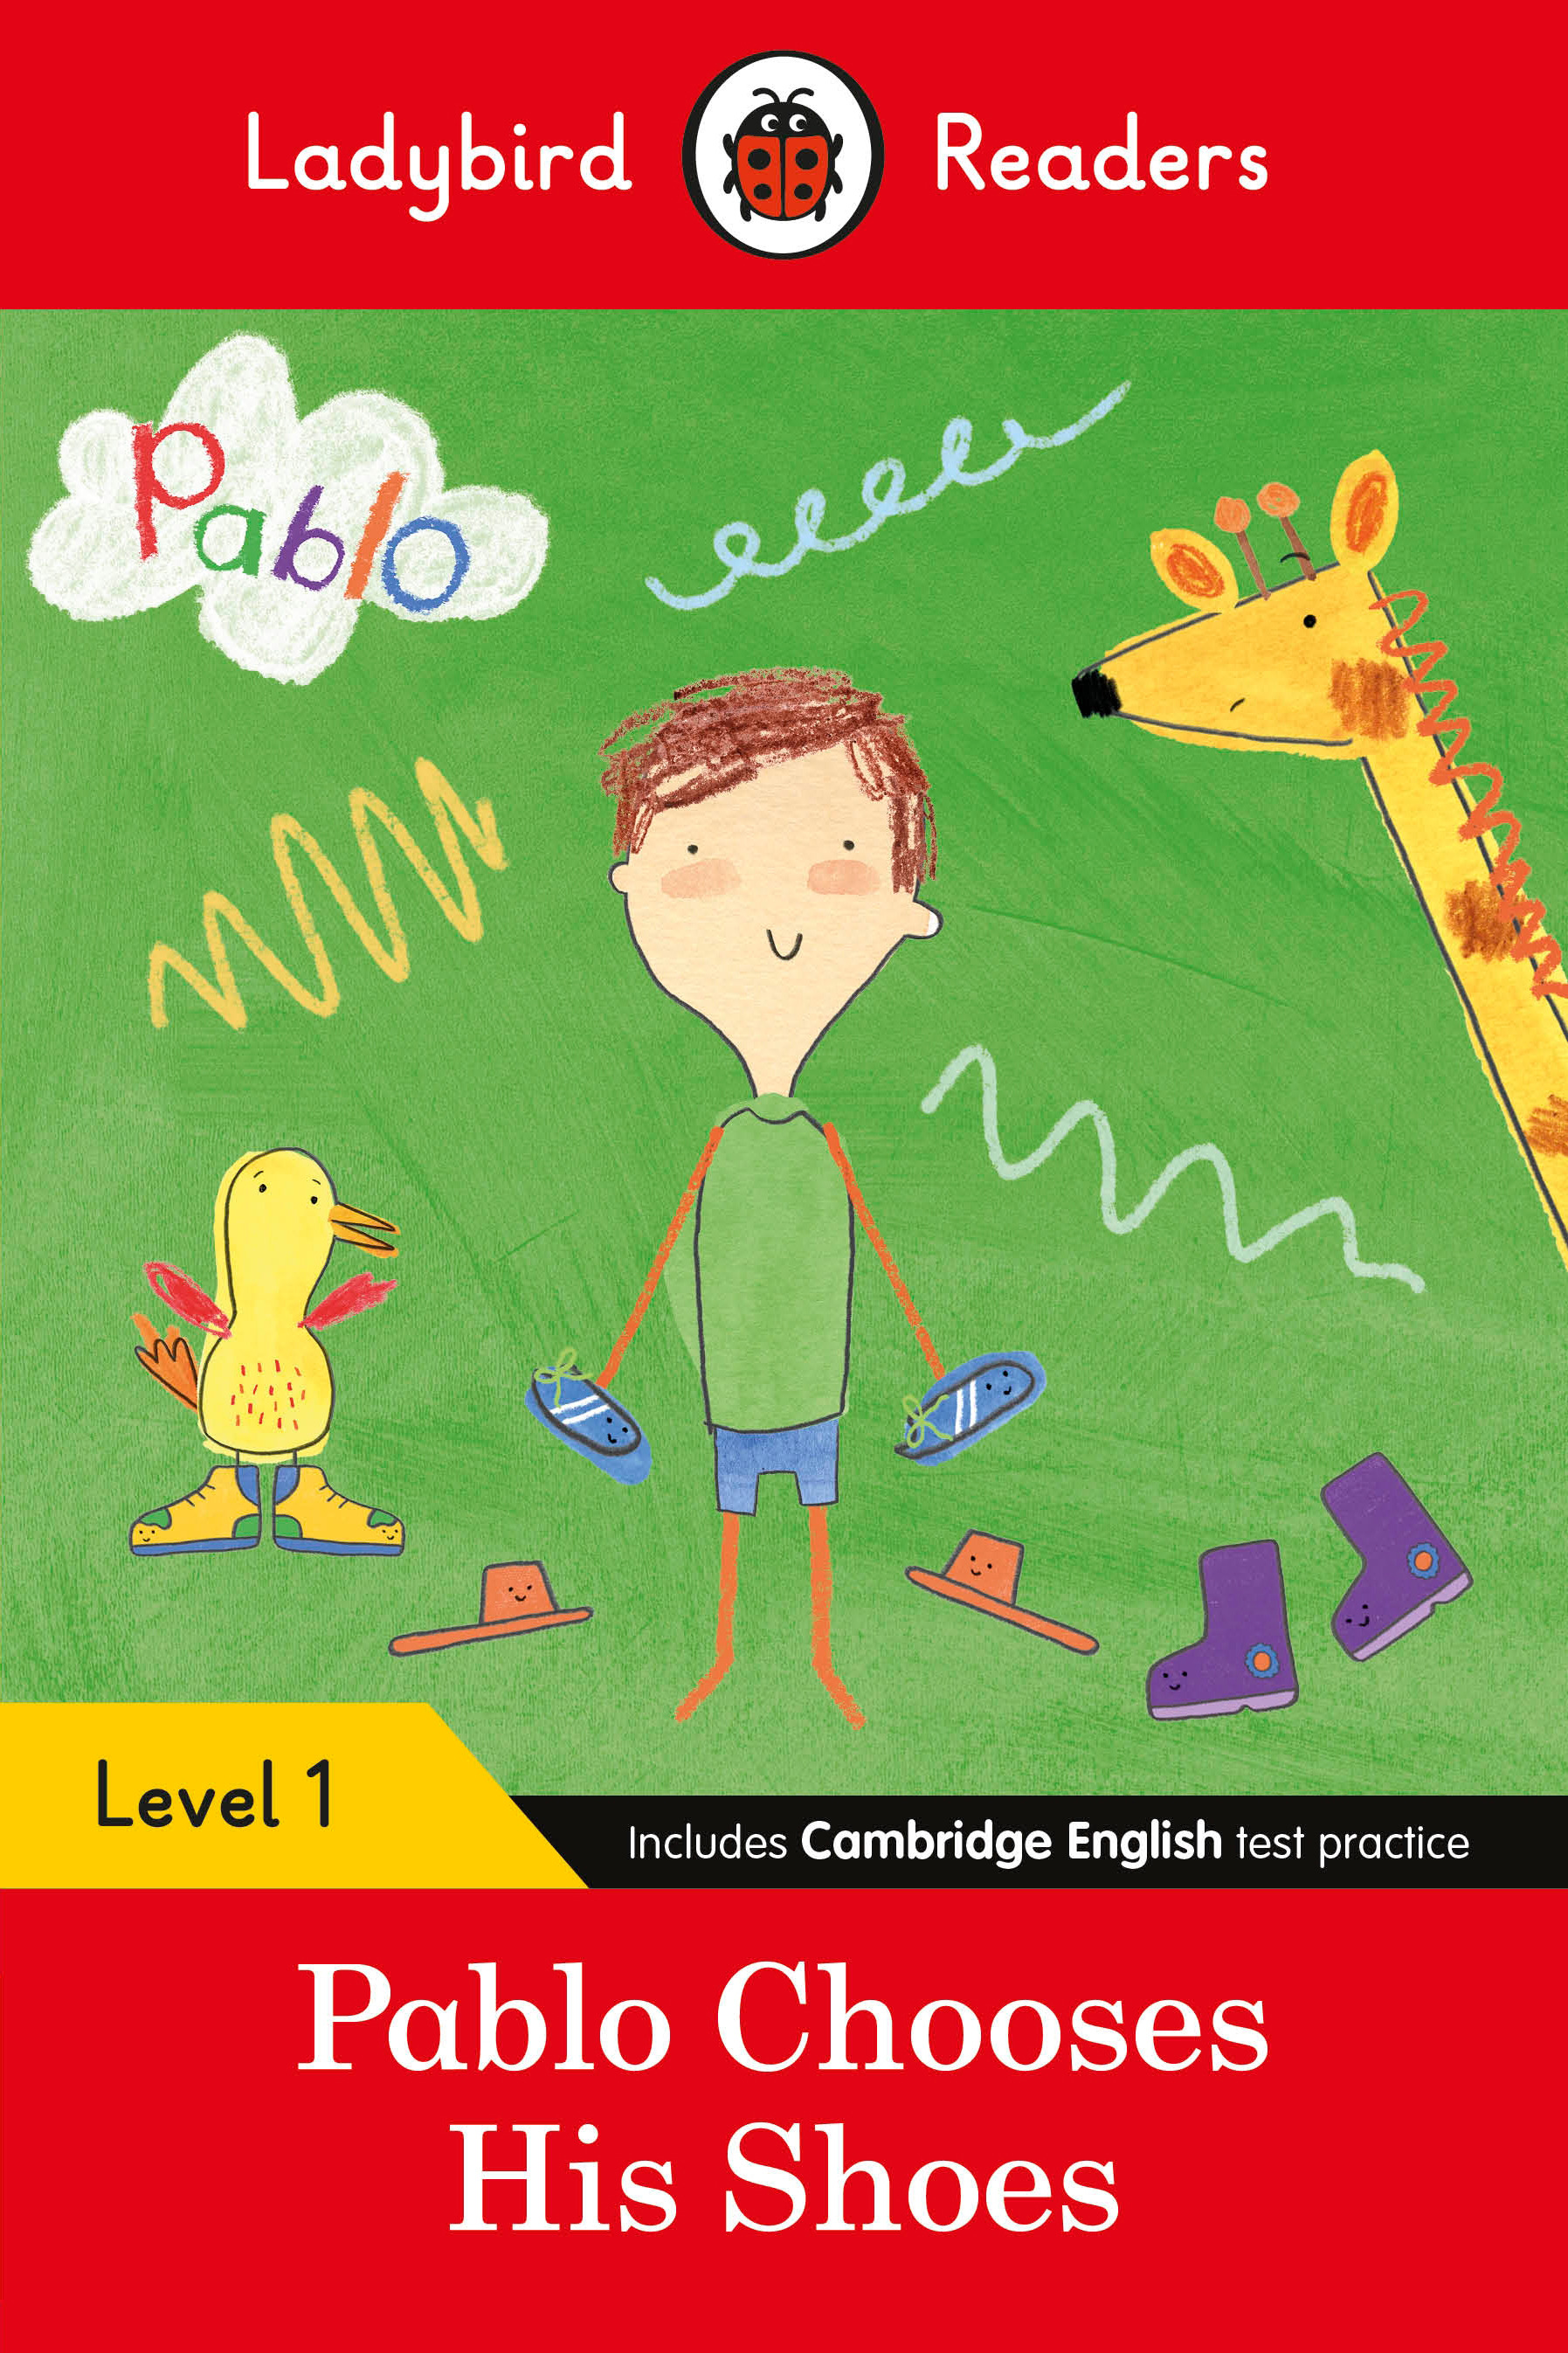 Ladybird Readers Level 1 - Pablo - Pablo Chooses his Shoes (ELT Graded Reader) | First reader